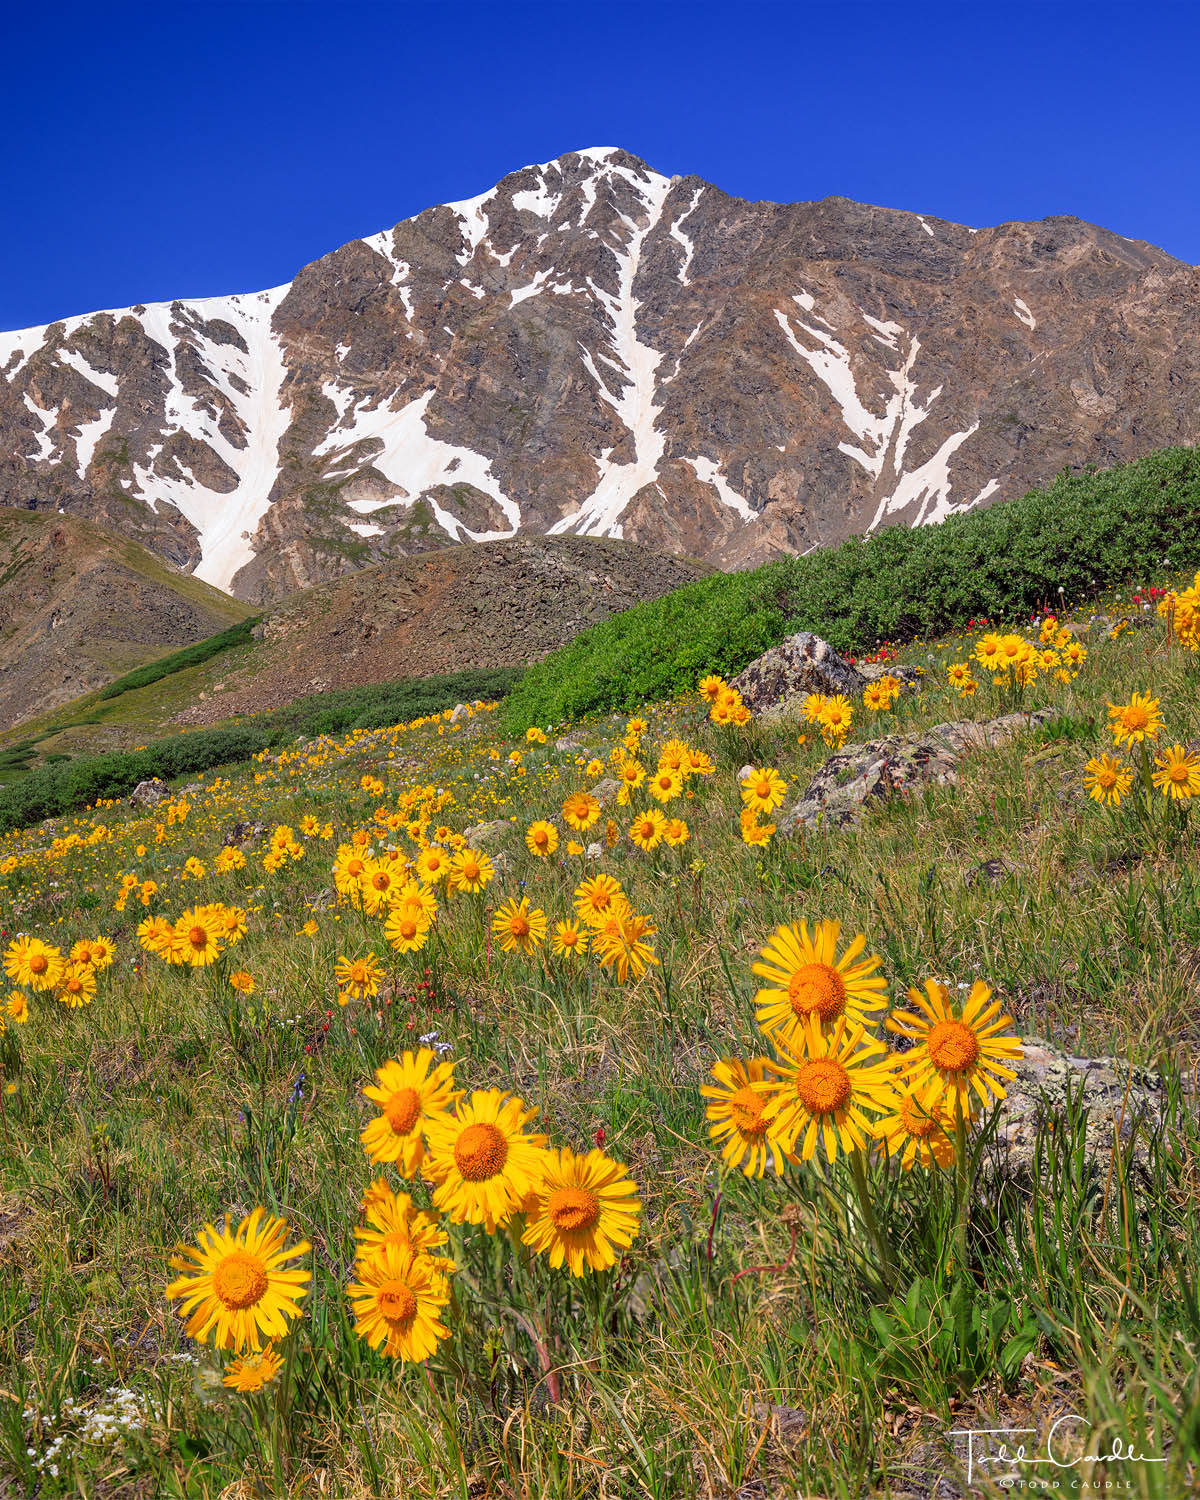 Alpine sunflowers grace the tundra below Torreys Peak, a fourteener in the Front Range.